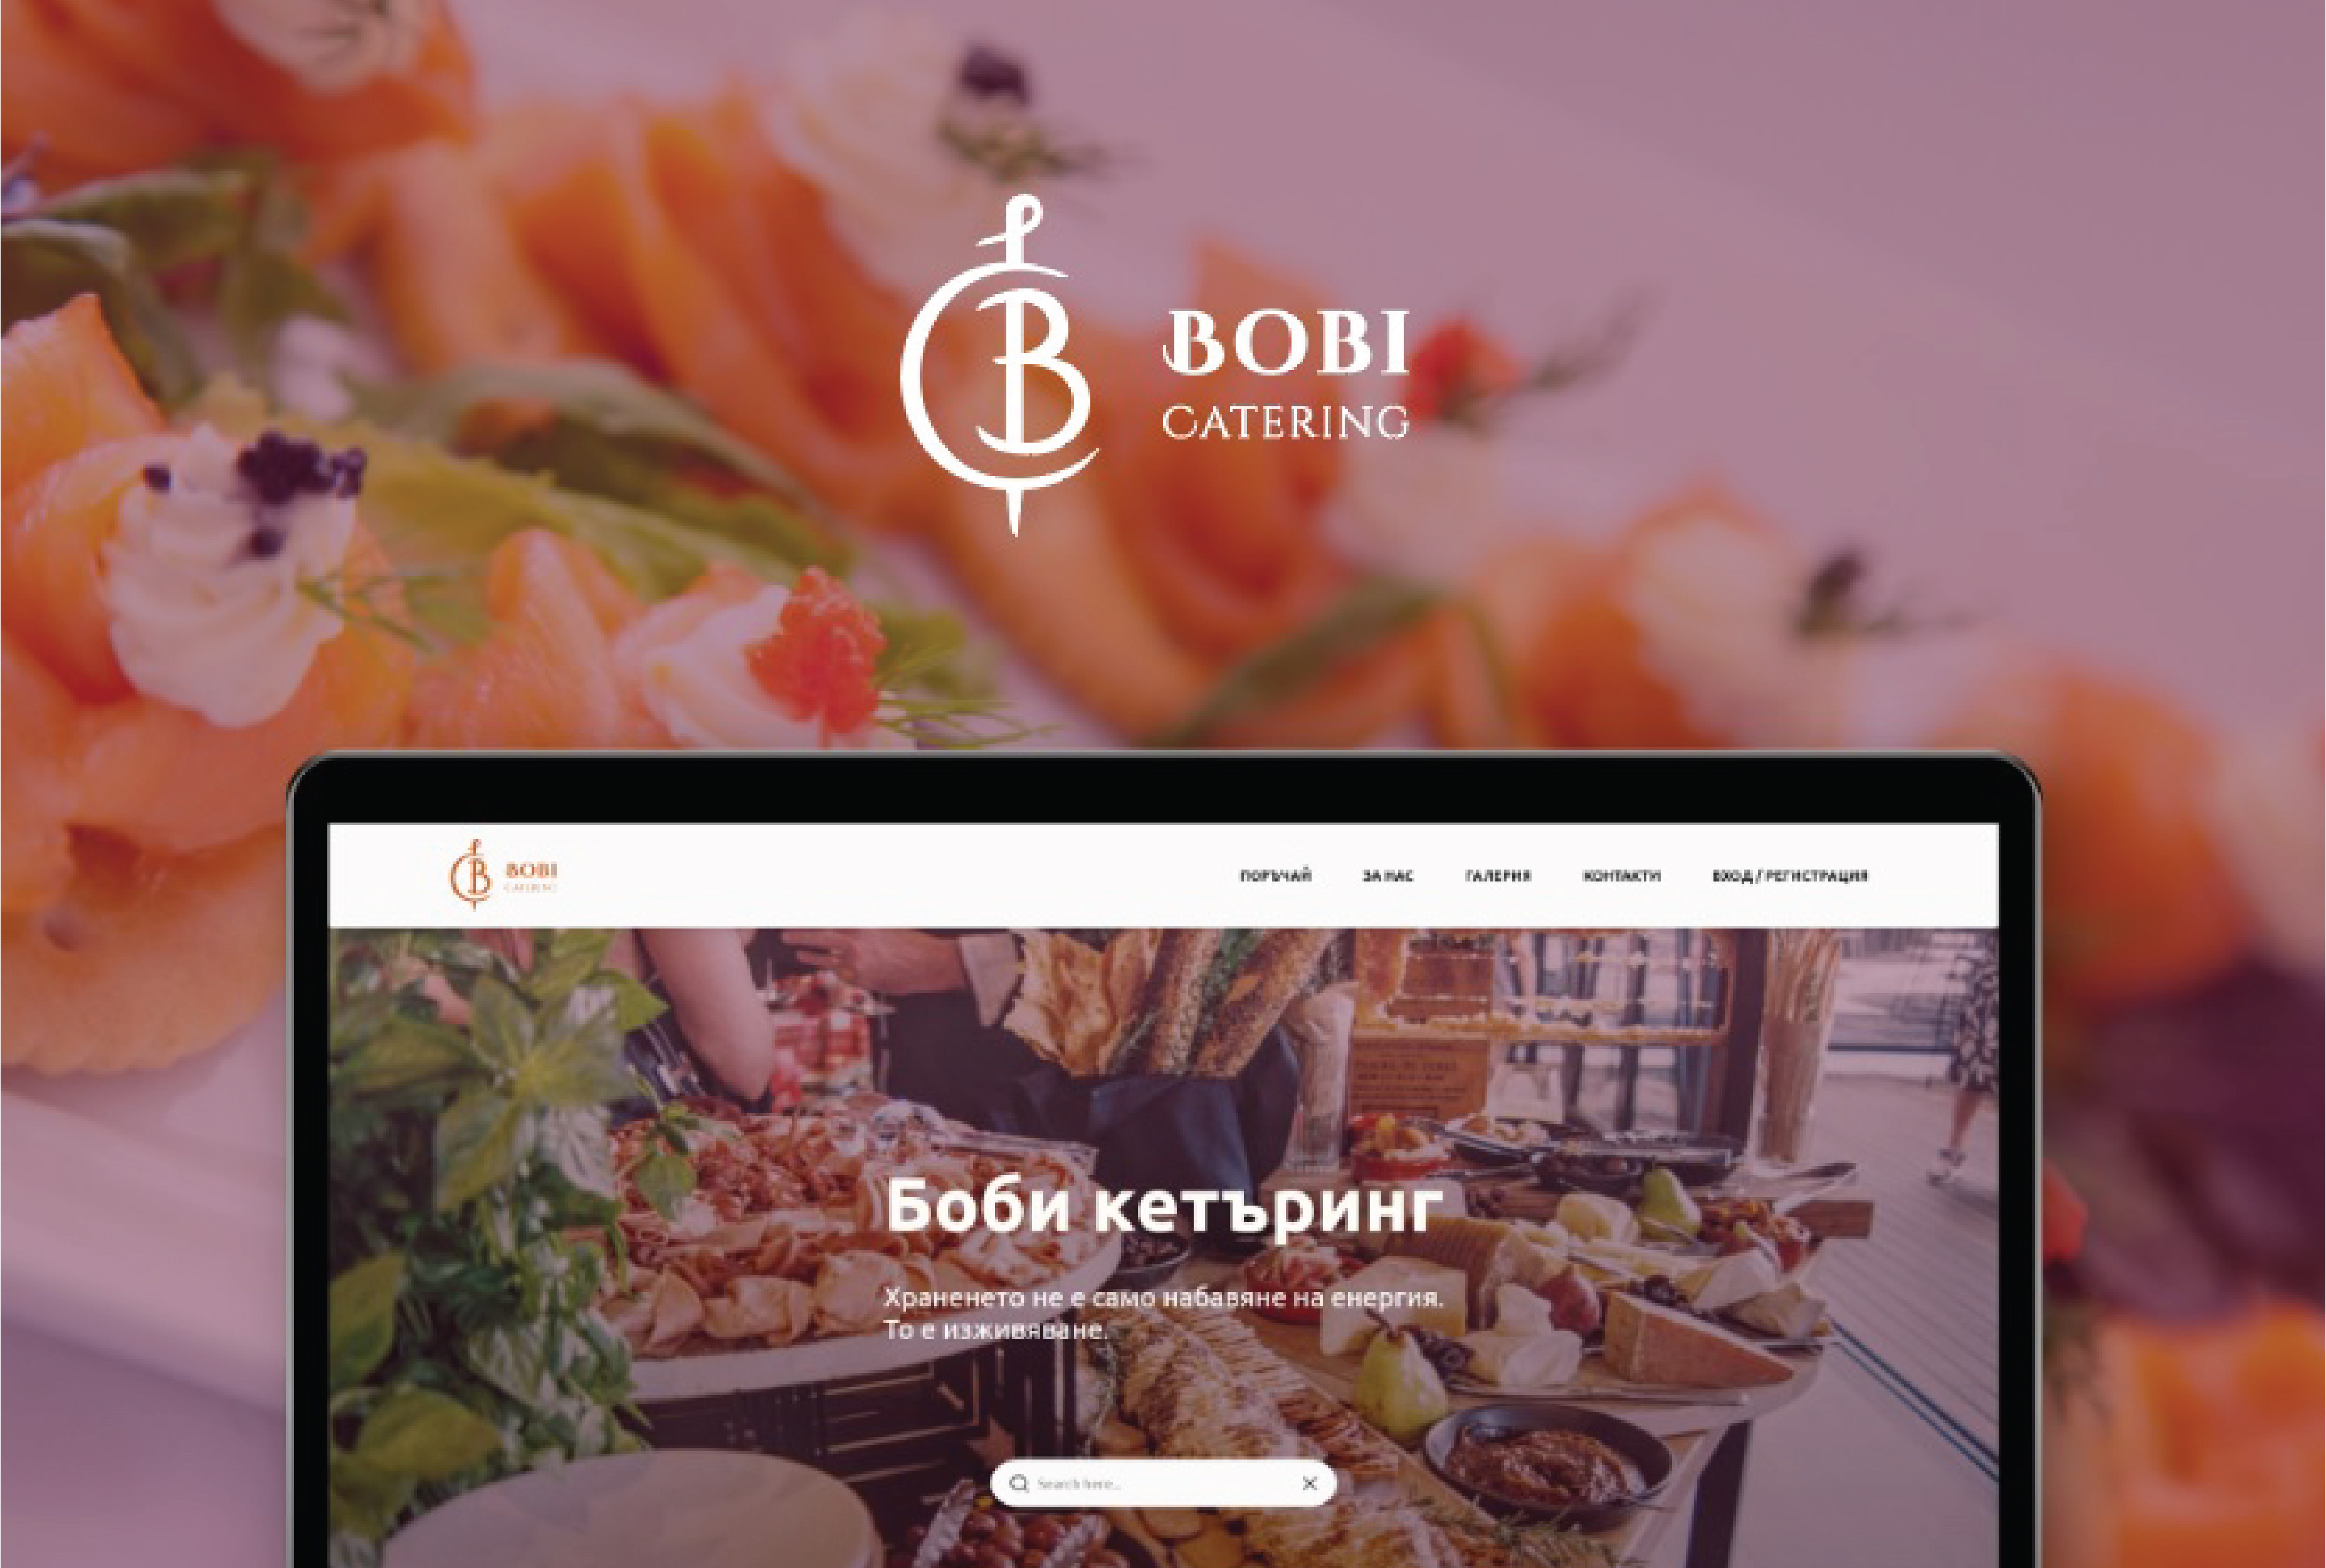 Bobi Catering project image showing desktop web design and logo